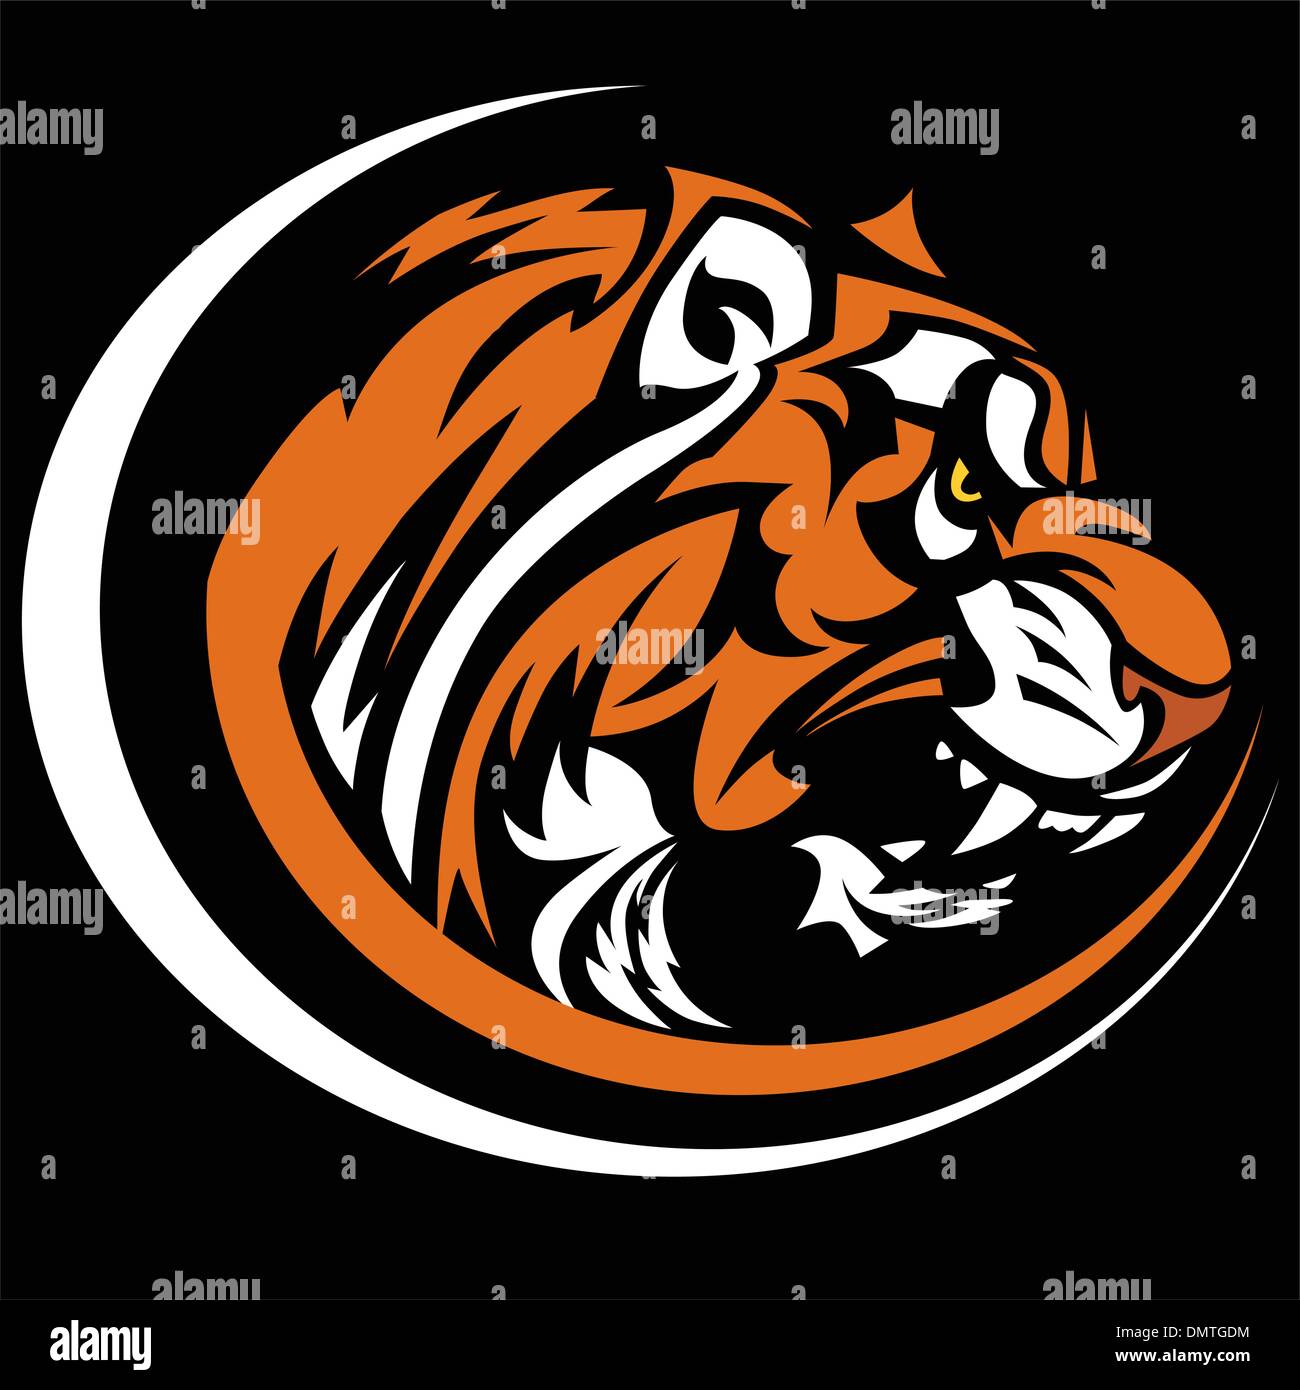 Tiger Mascot Graphic Vector Image Stock Vector